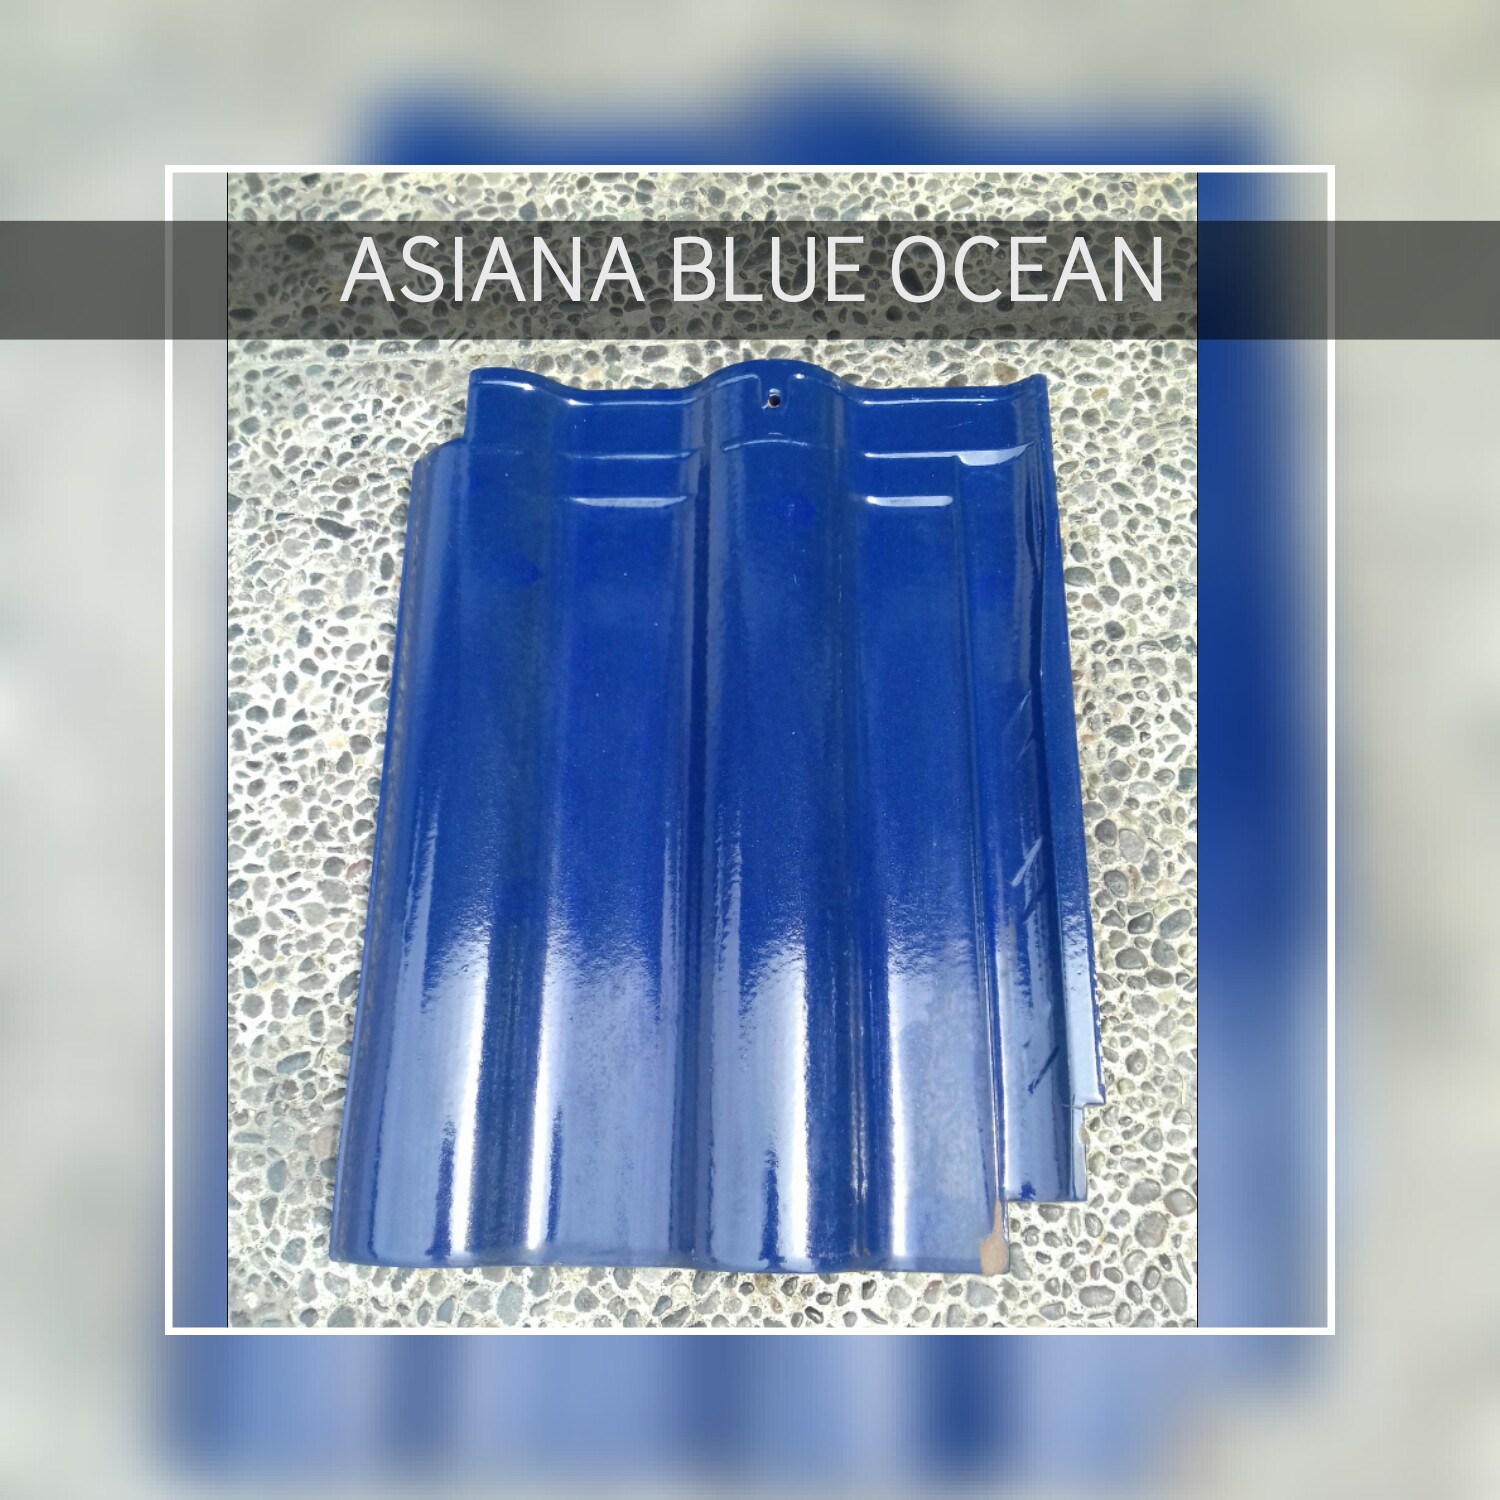  Genteng keramik biru blue colour laflagenteng